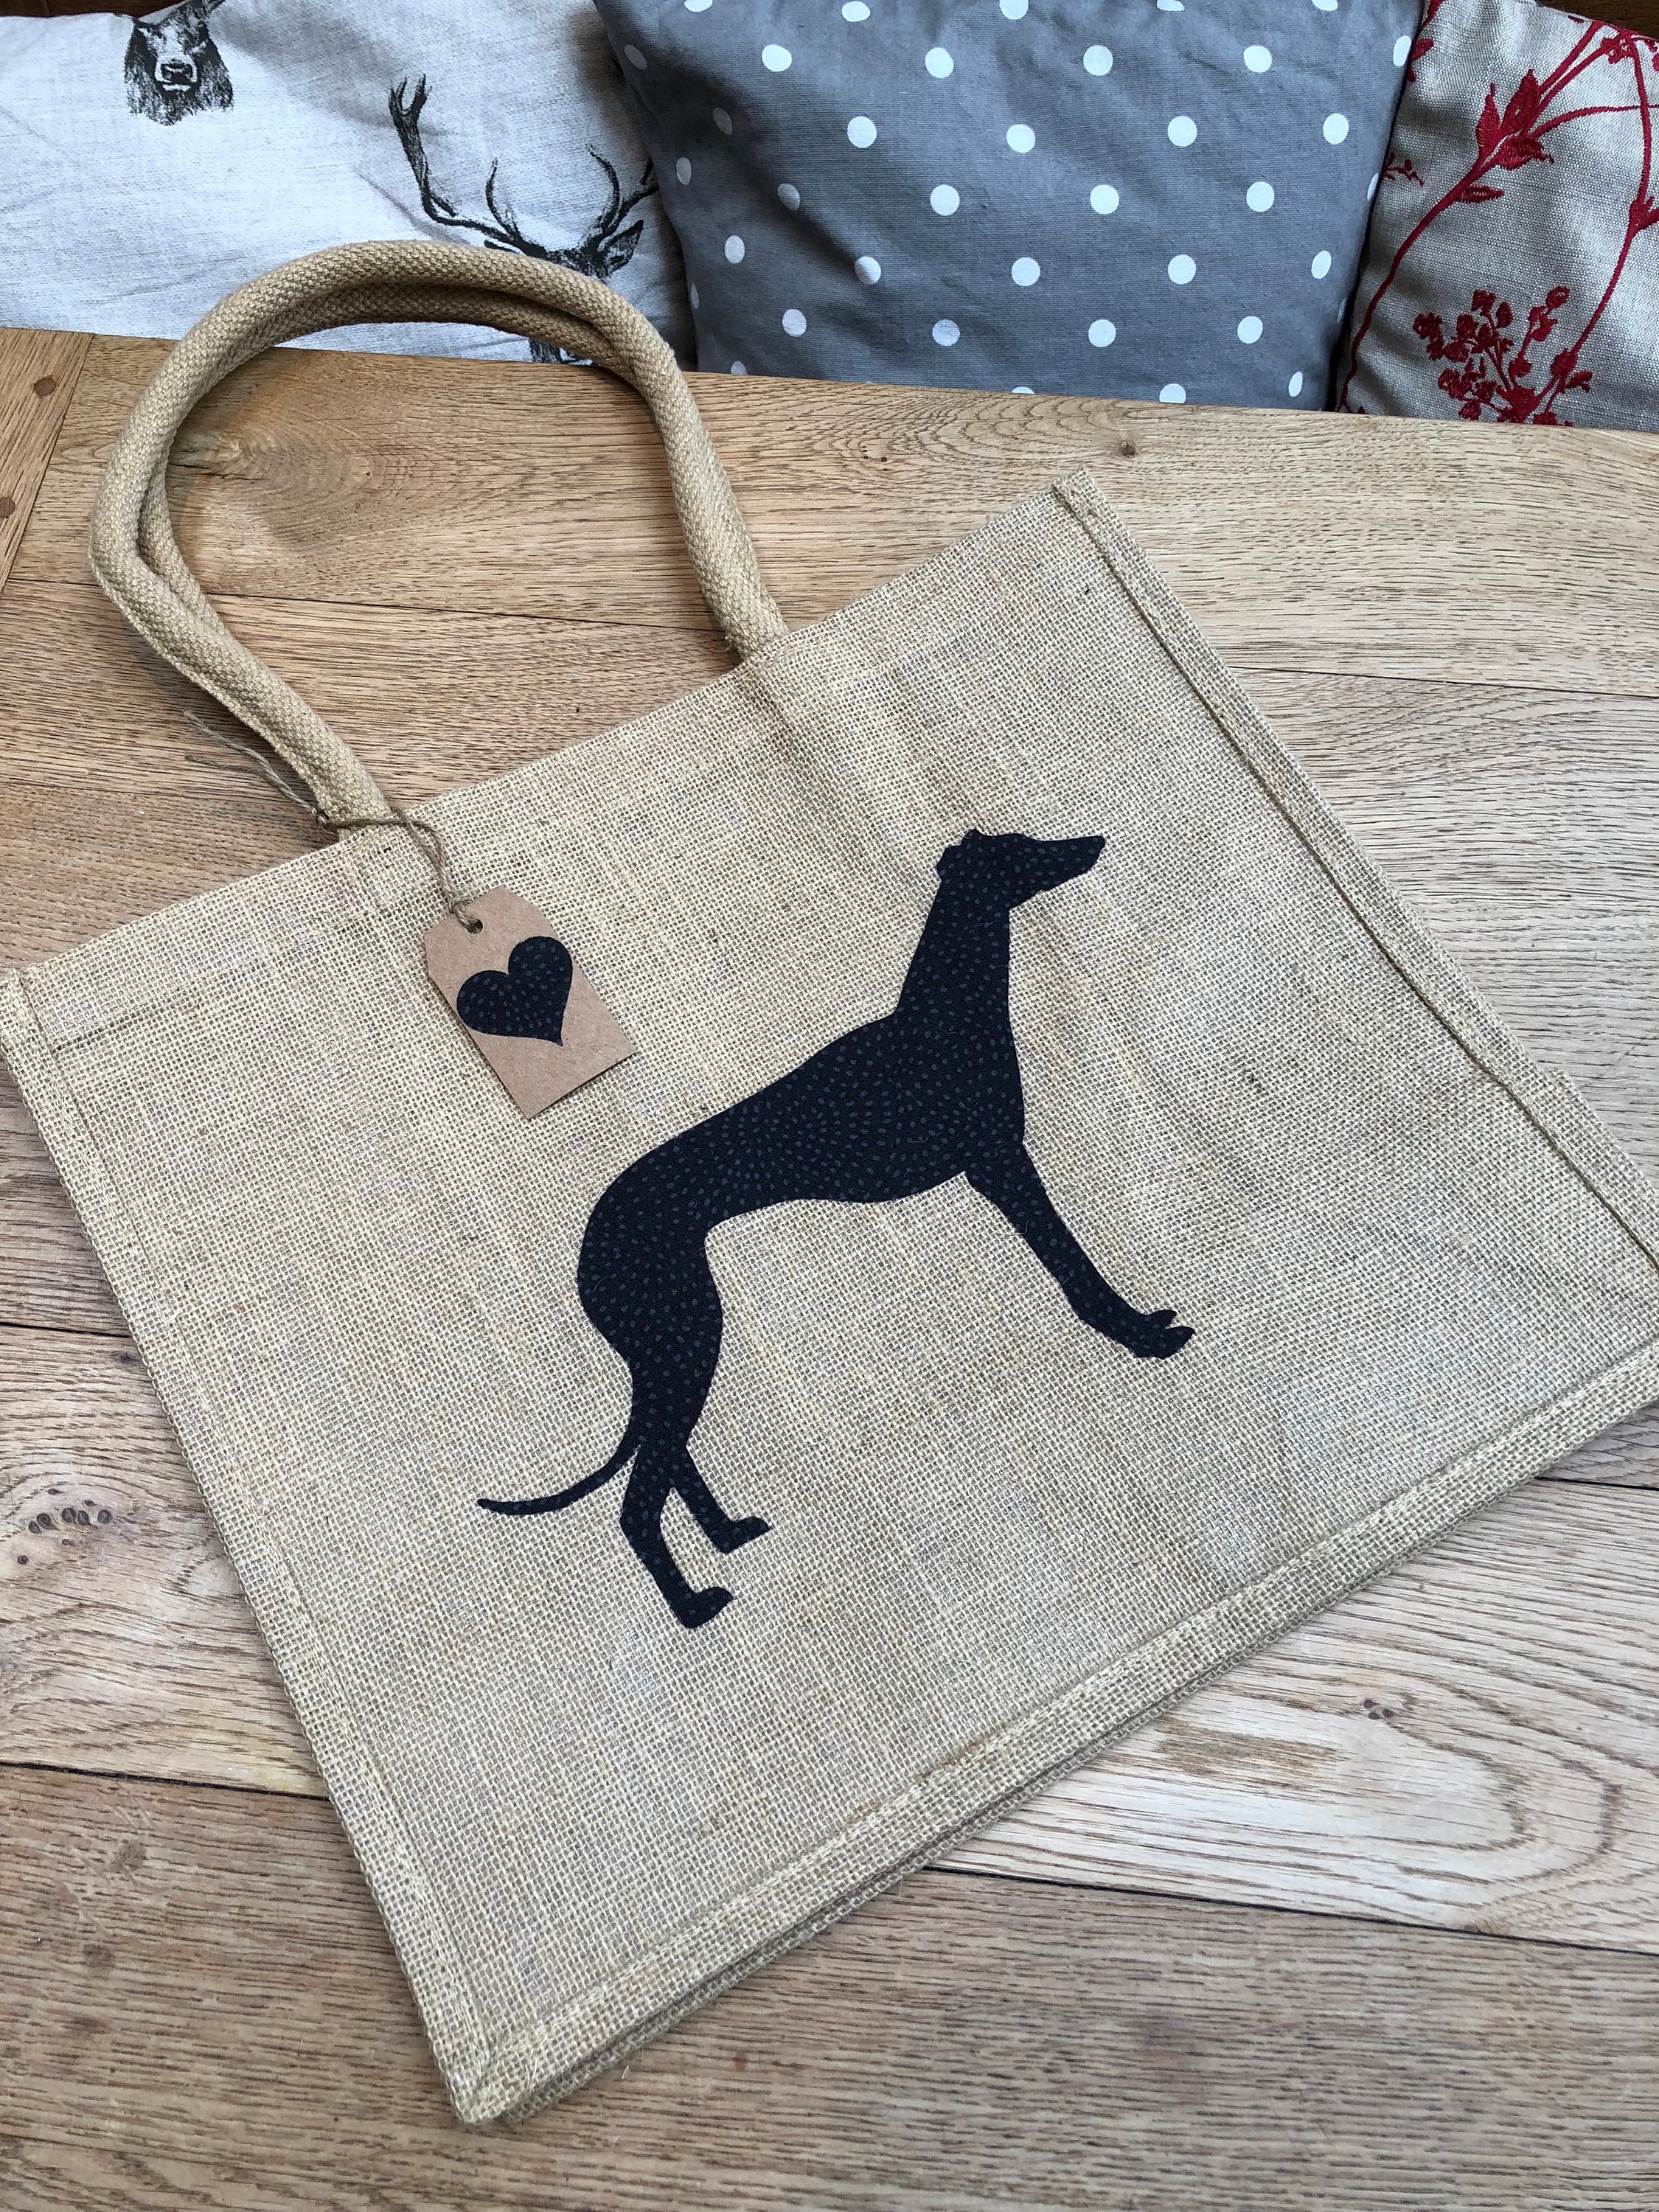 Luxury jute shopping bag featuring a Greyhound dog design | Etsy